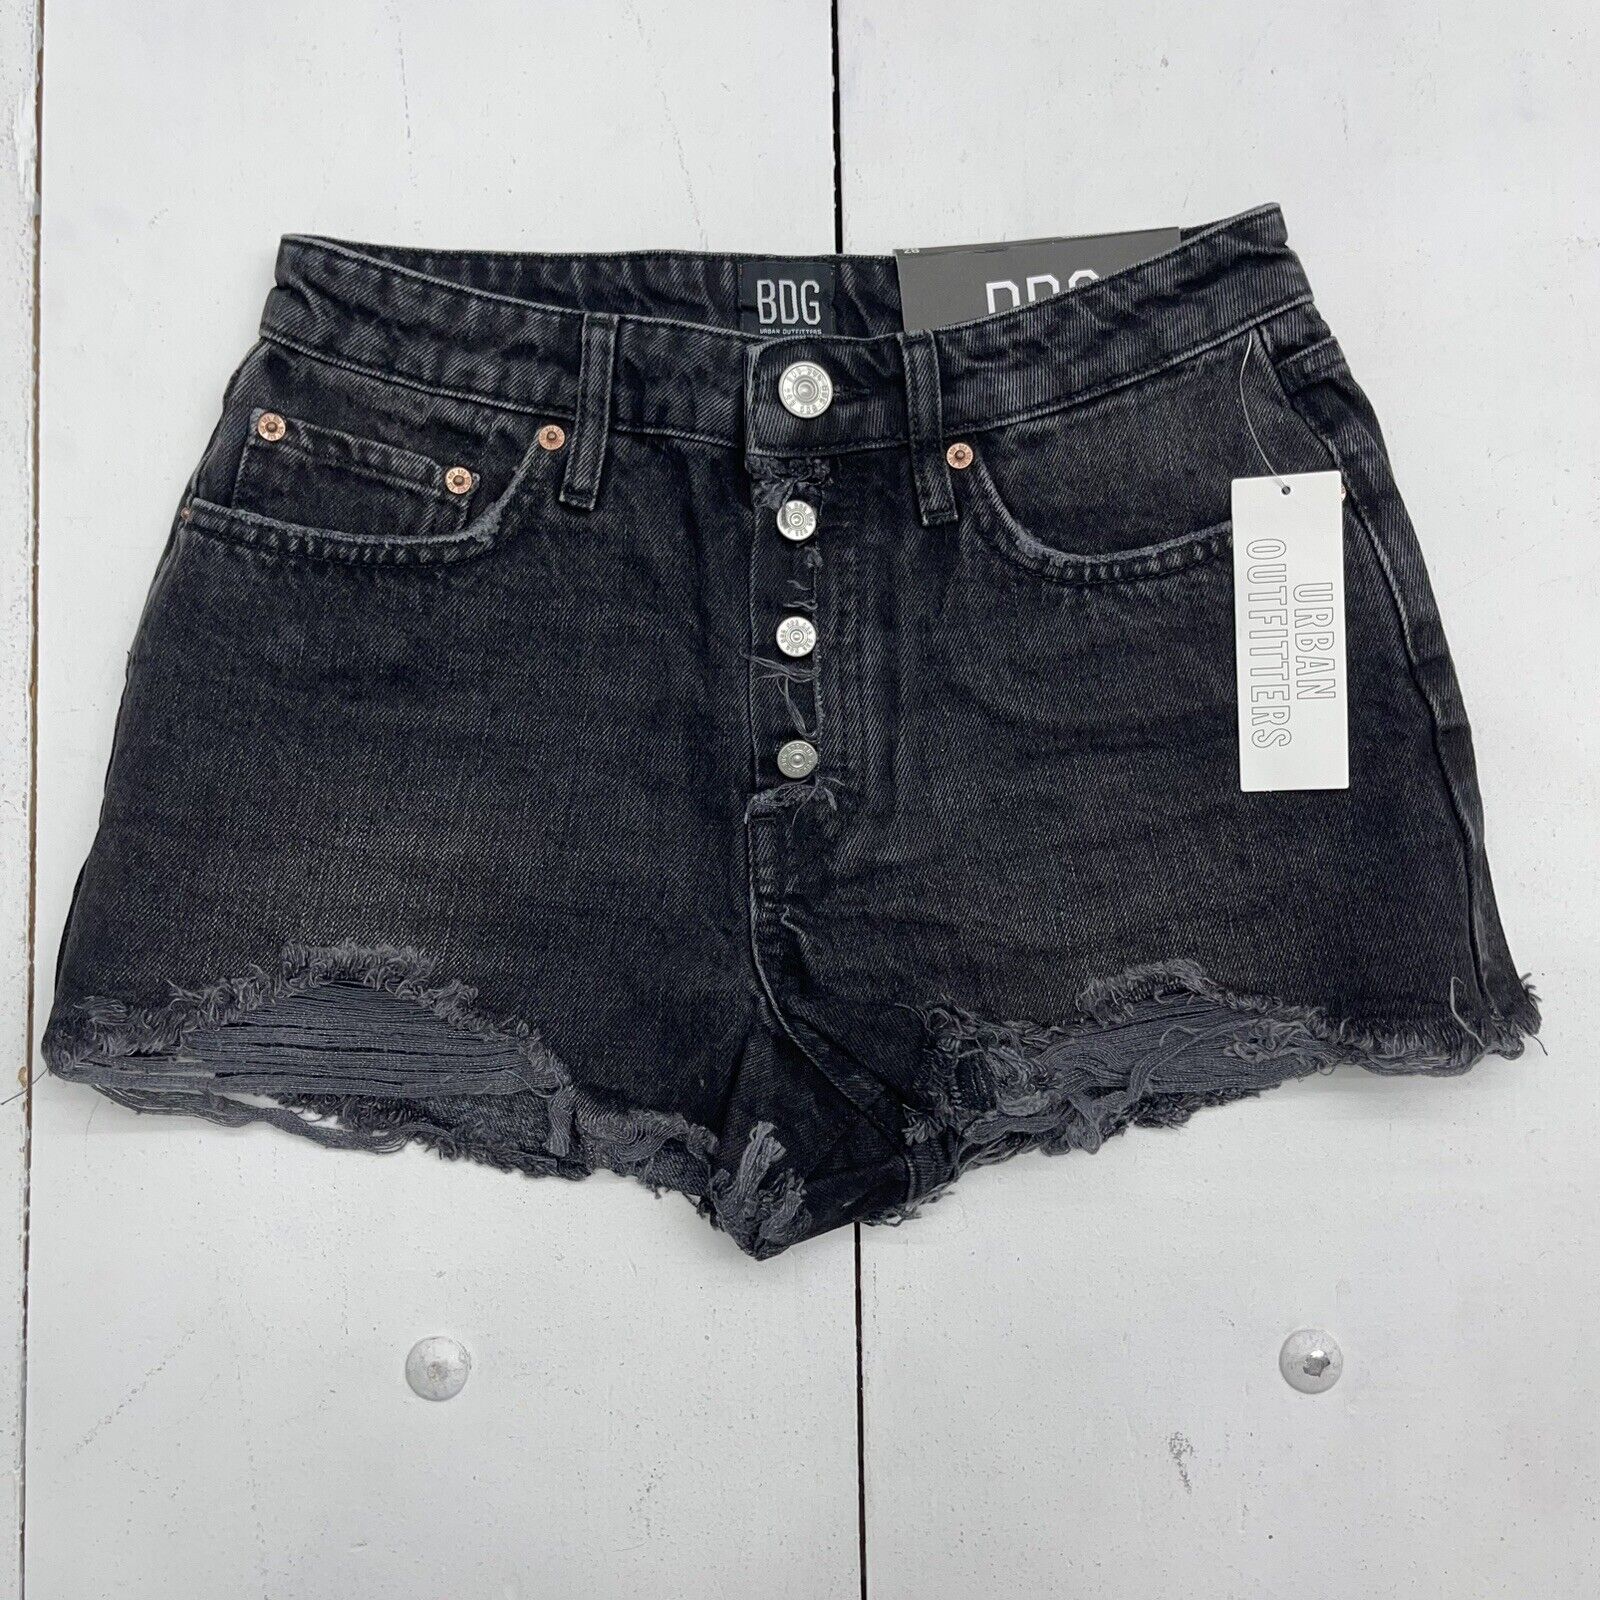 BDG Black Summer Cut Off Denim Distressed Shorts Women’s Size 28 New